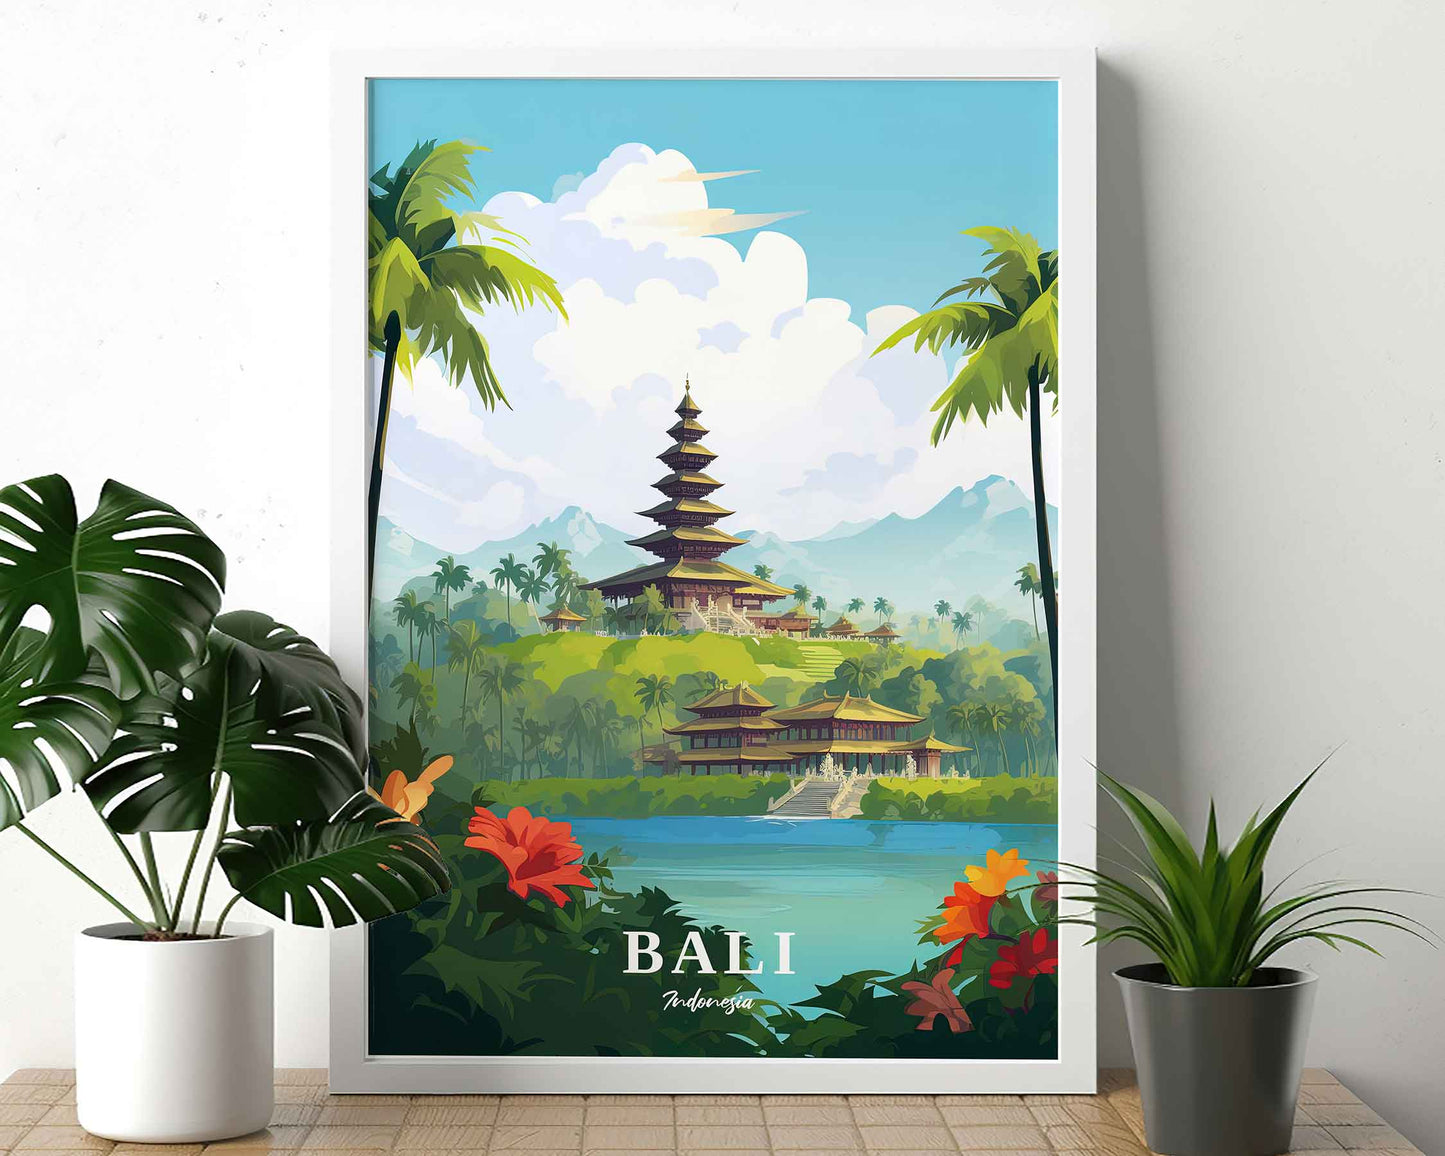 Framed Image of Bali Indonesia Travel Poster Wall Art Prints Illustration